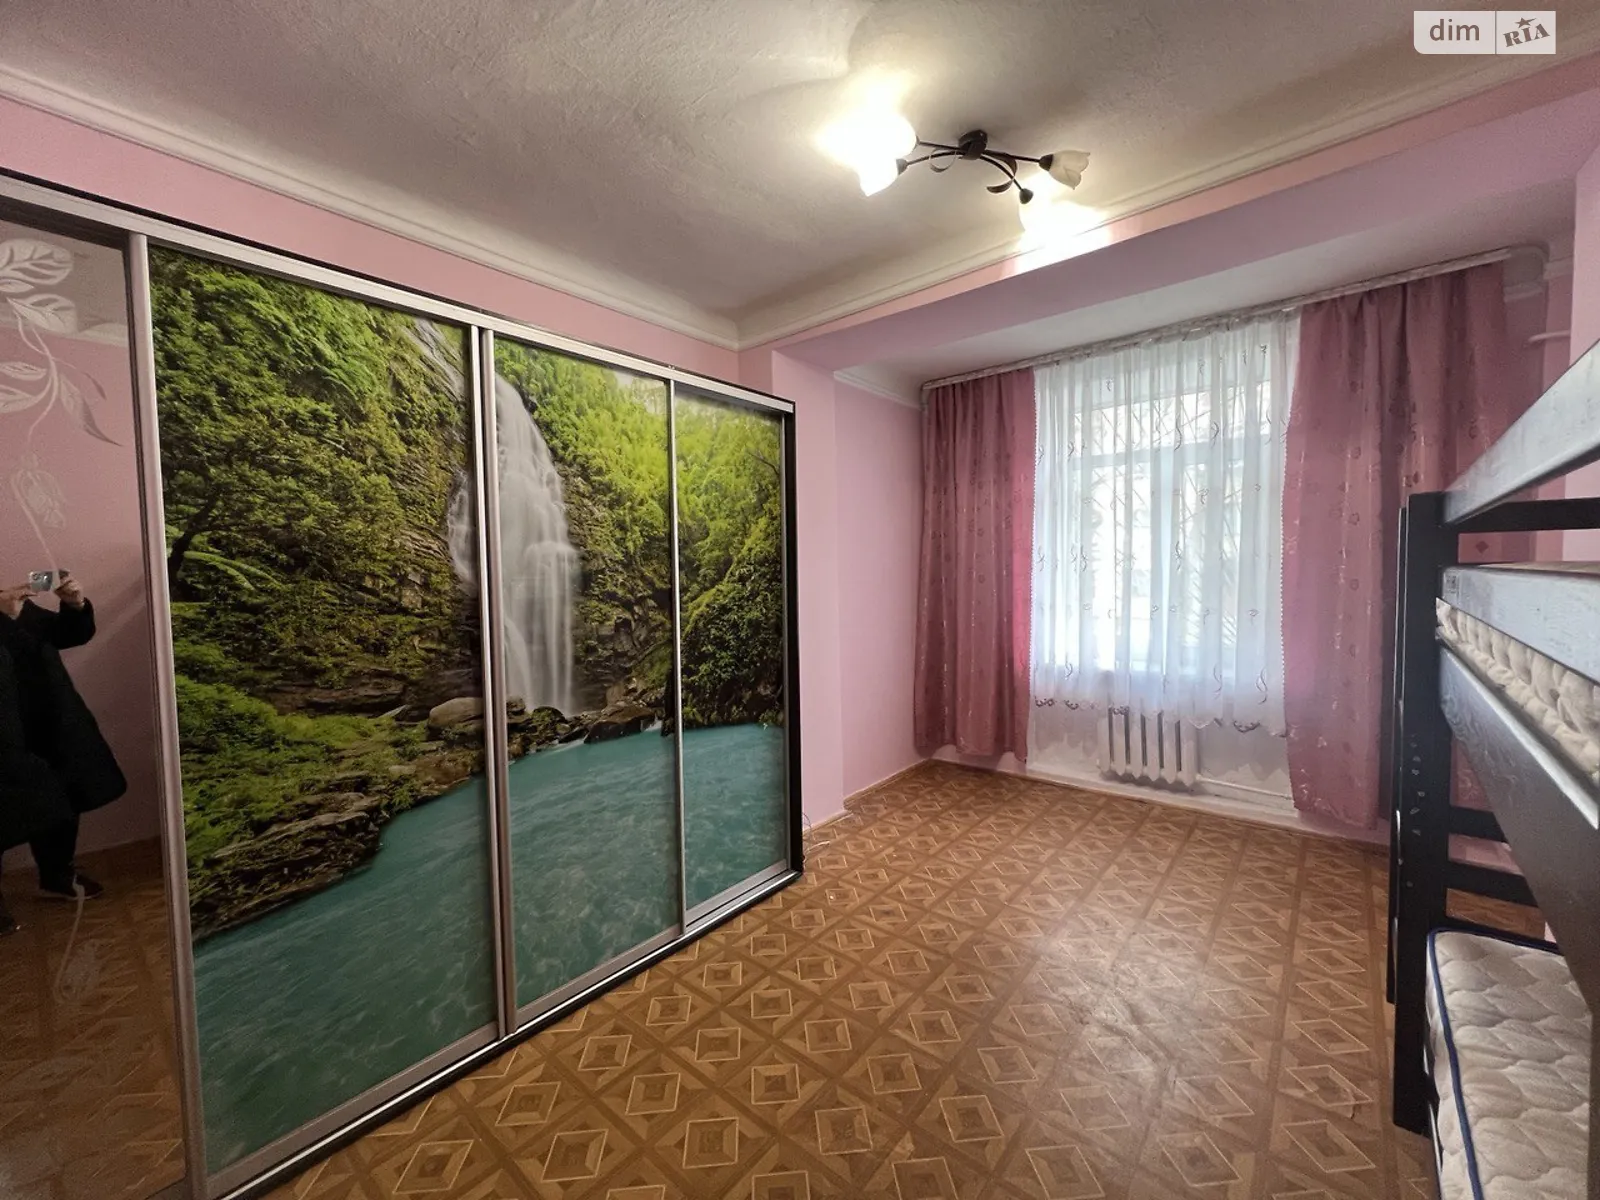 Сдается в аренду комната 20 кв. м в Тернополе, цена: 3000 грн